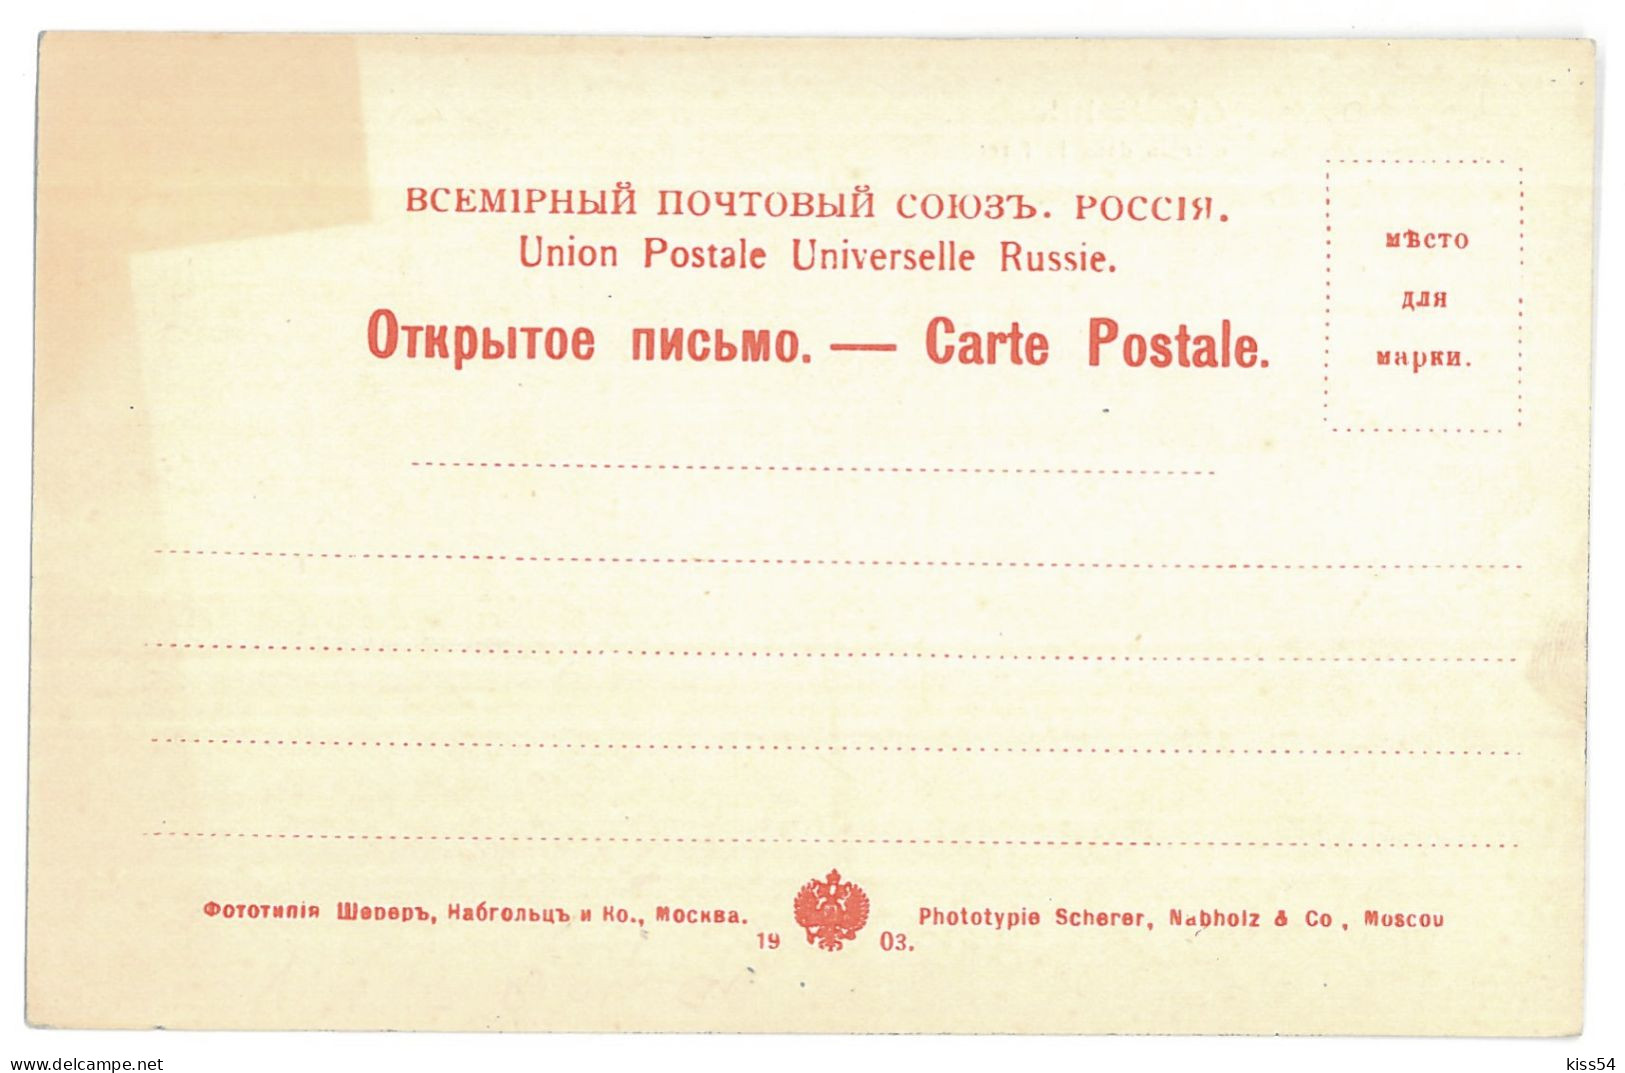 RUS 996 - 15458 TRAIN On Railway In SIBERIA, Russia - Old Postcard - Unused - Rusia